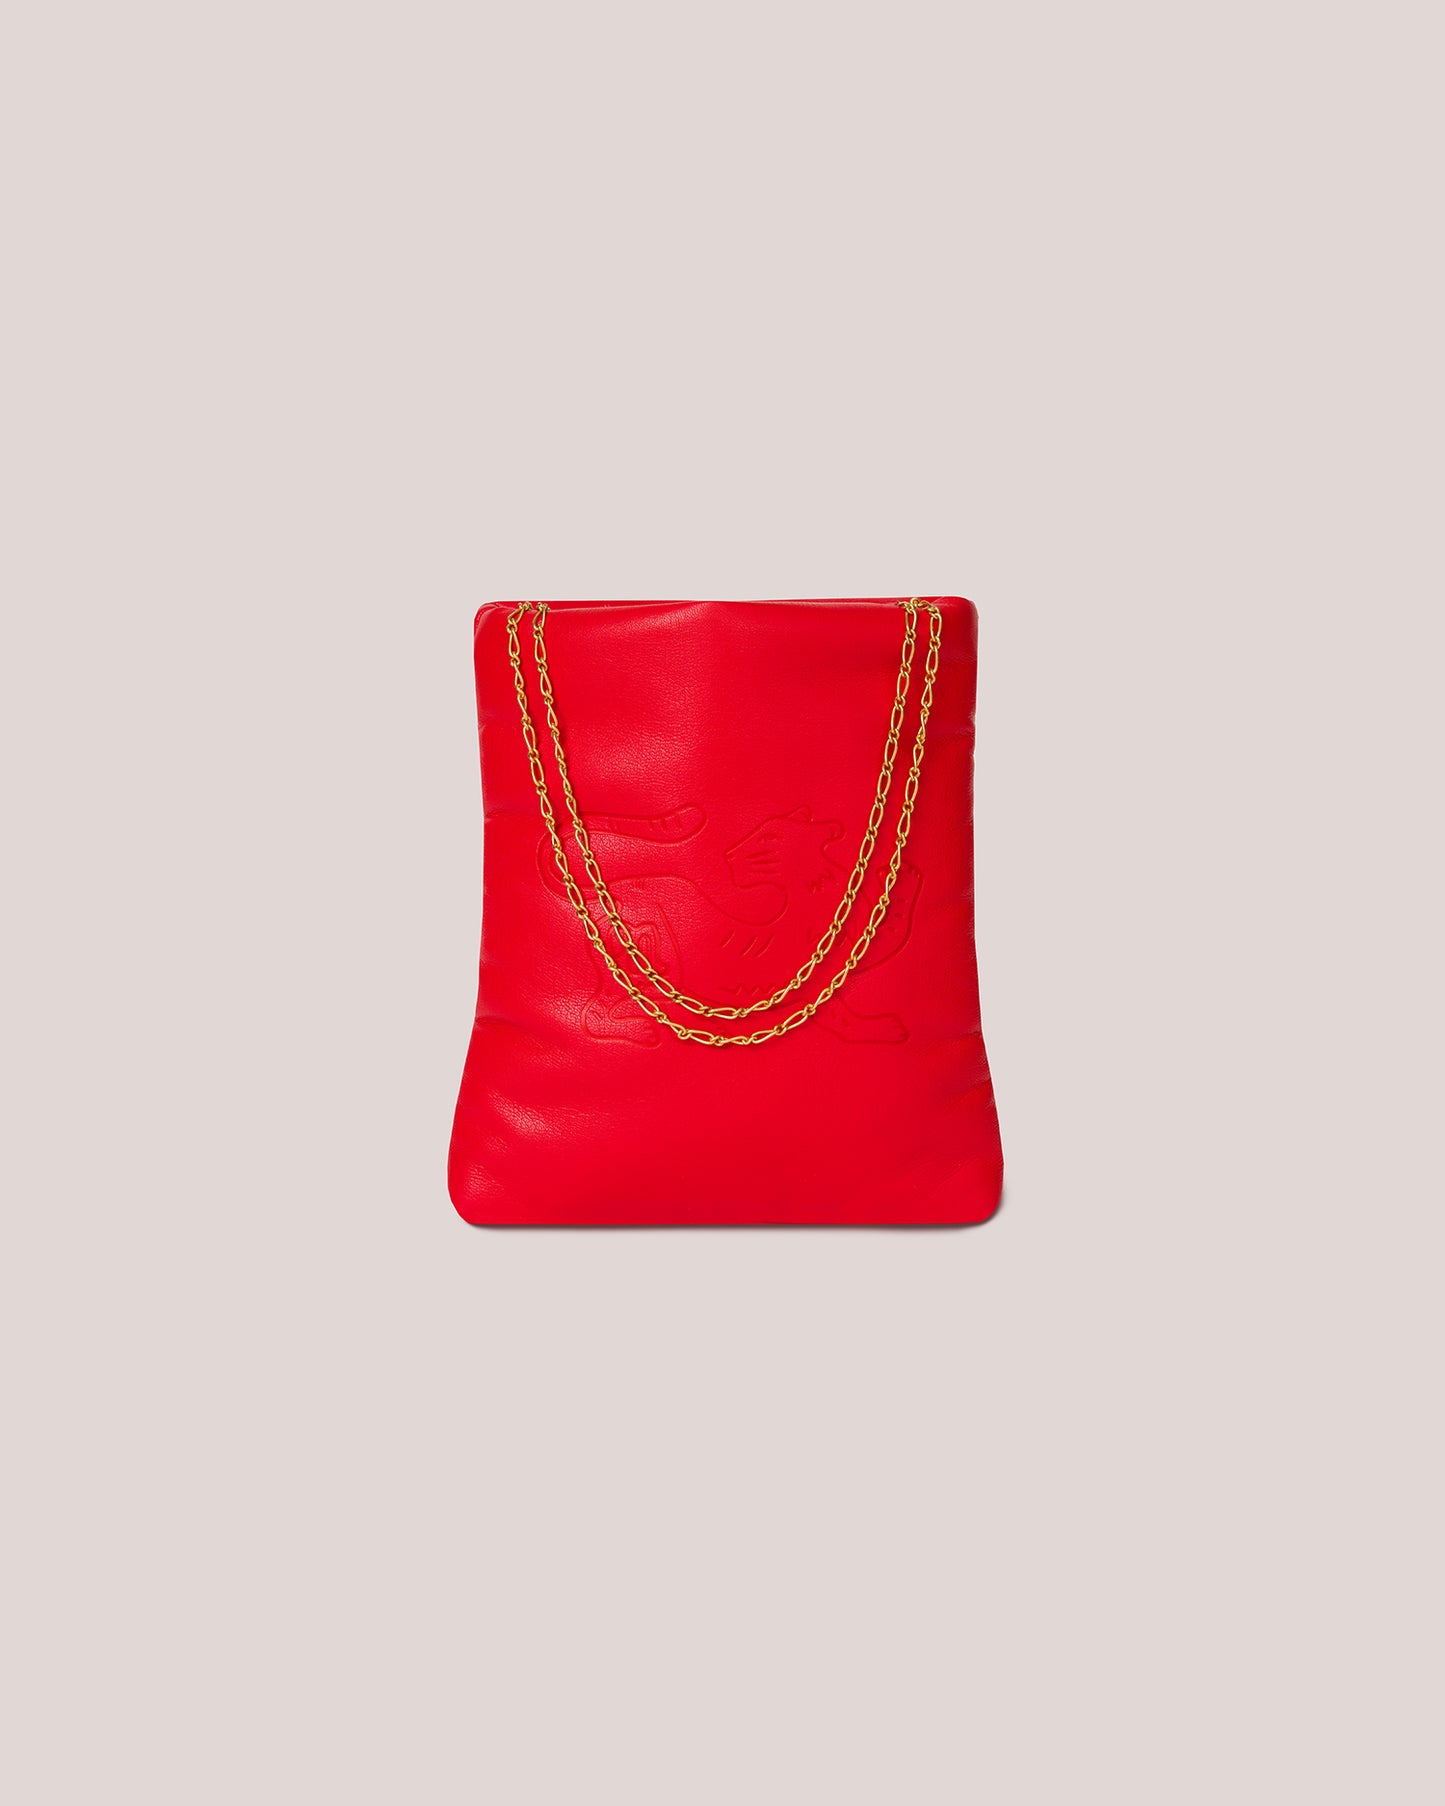 Noelani - Vegan Leather Chain Handle Bag - Red Cny 21